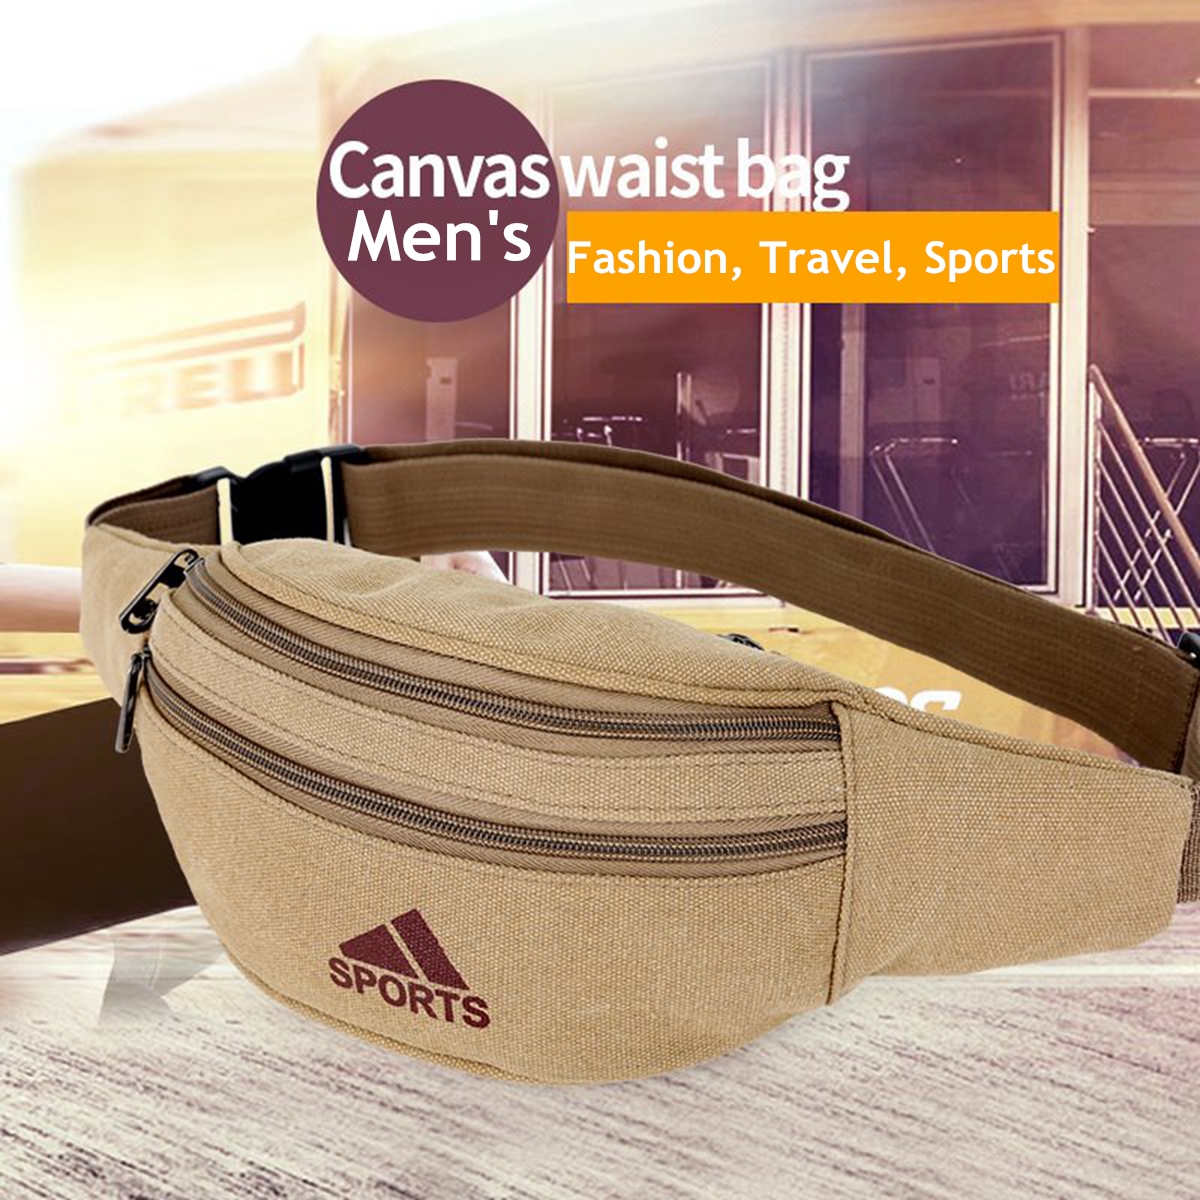 Men-Canvas-Waist-Bag-Outdoor-Camping-Hiking-Traveling-Sports-Bag-Storage-Bag-1589829-1